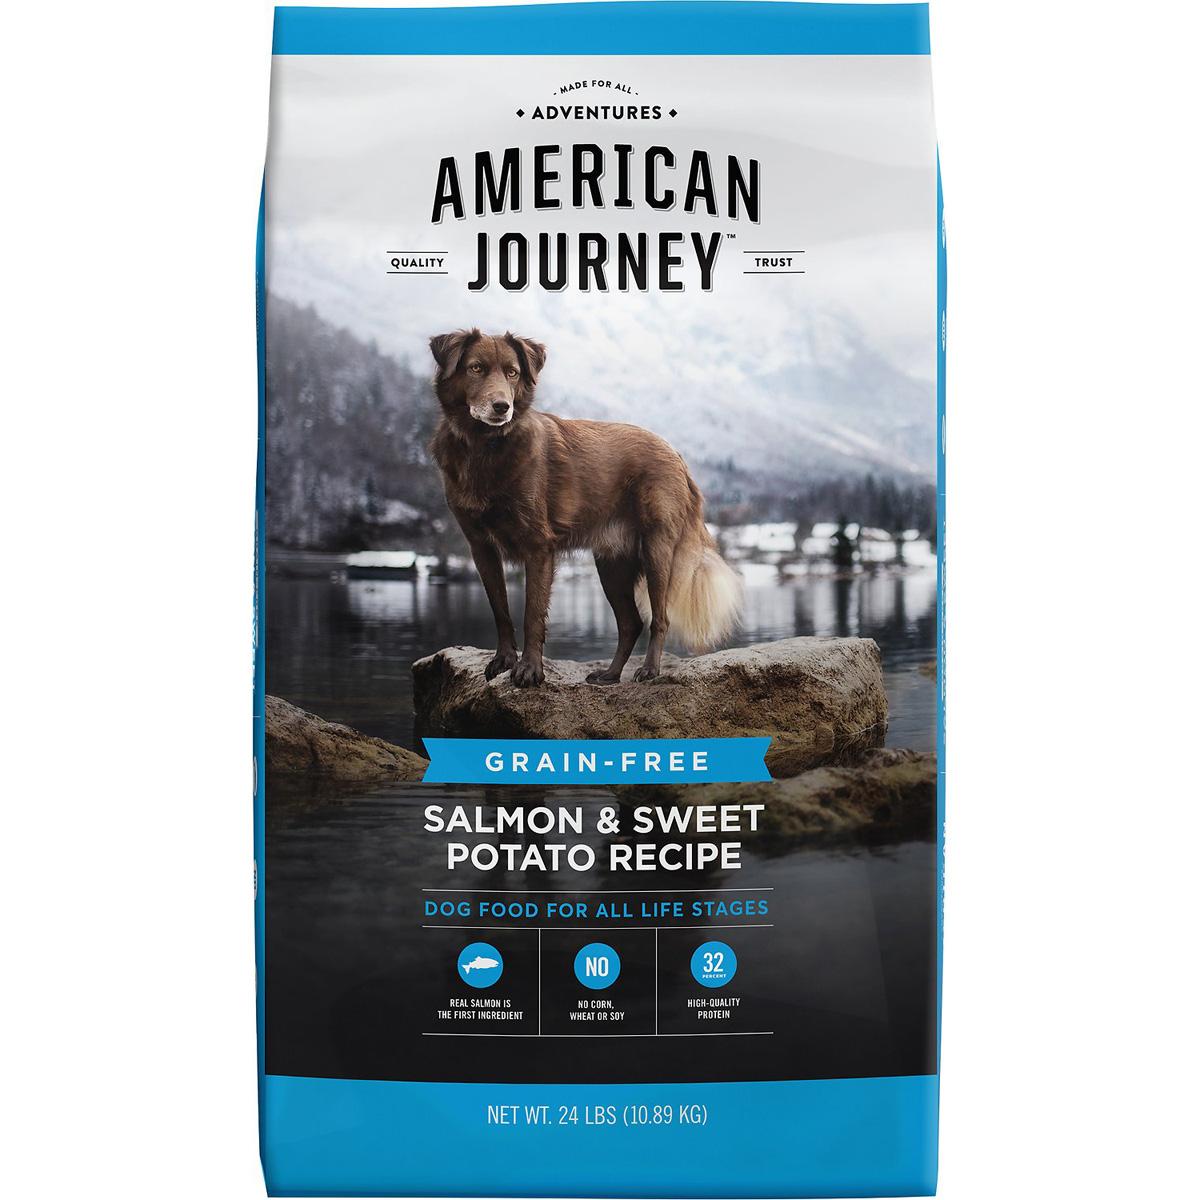 28lbs American Journey Active Life Formula Dog Food for $24.50